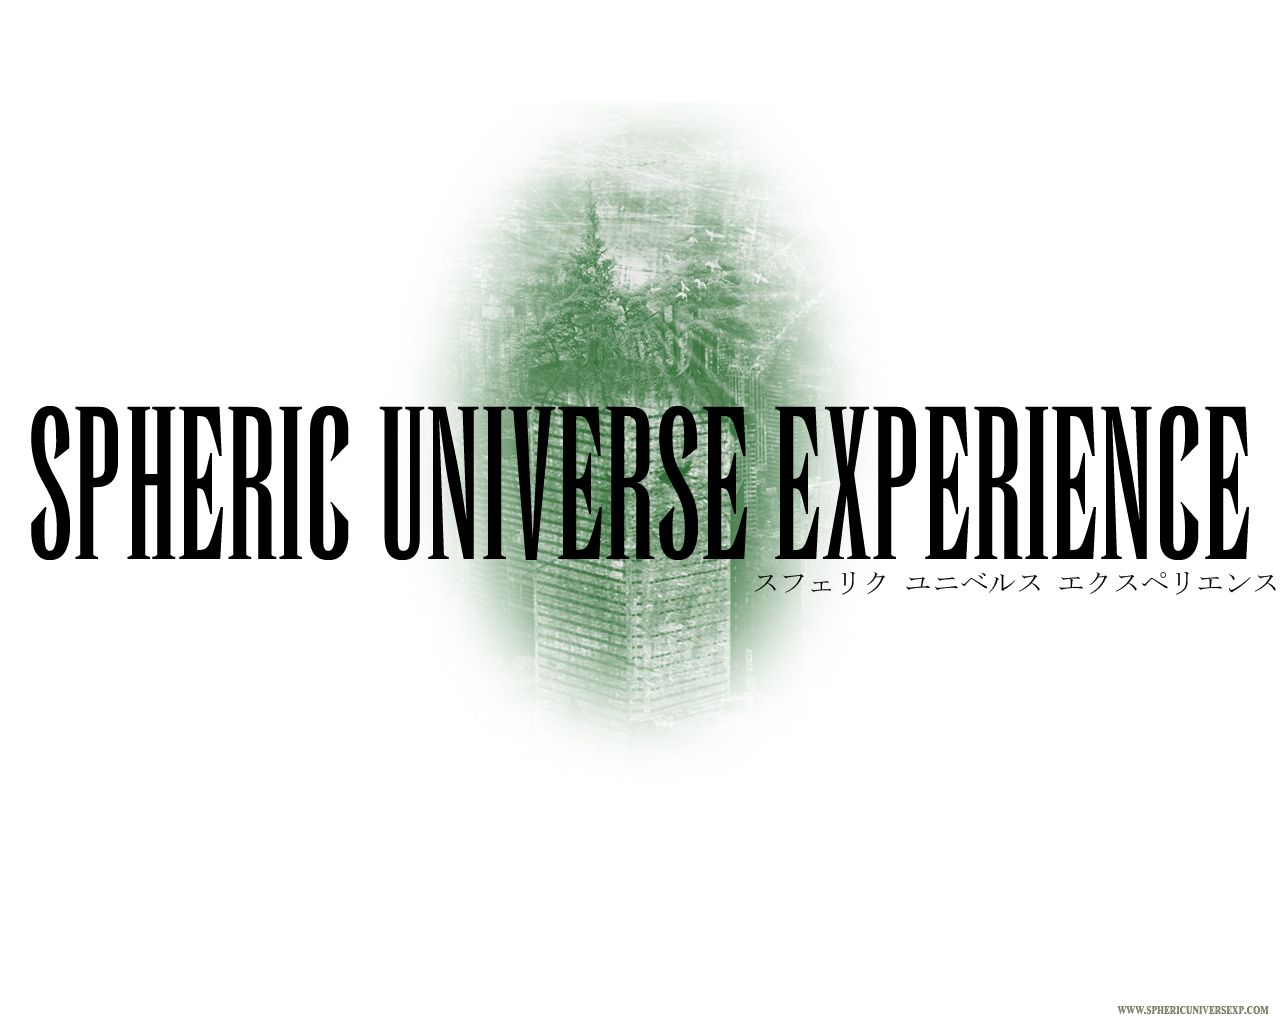 Spheric_Universe_Experience_05_1280x1024.jpg